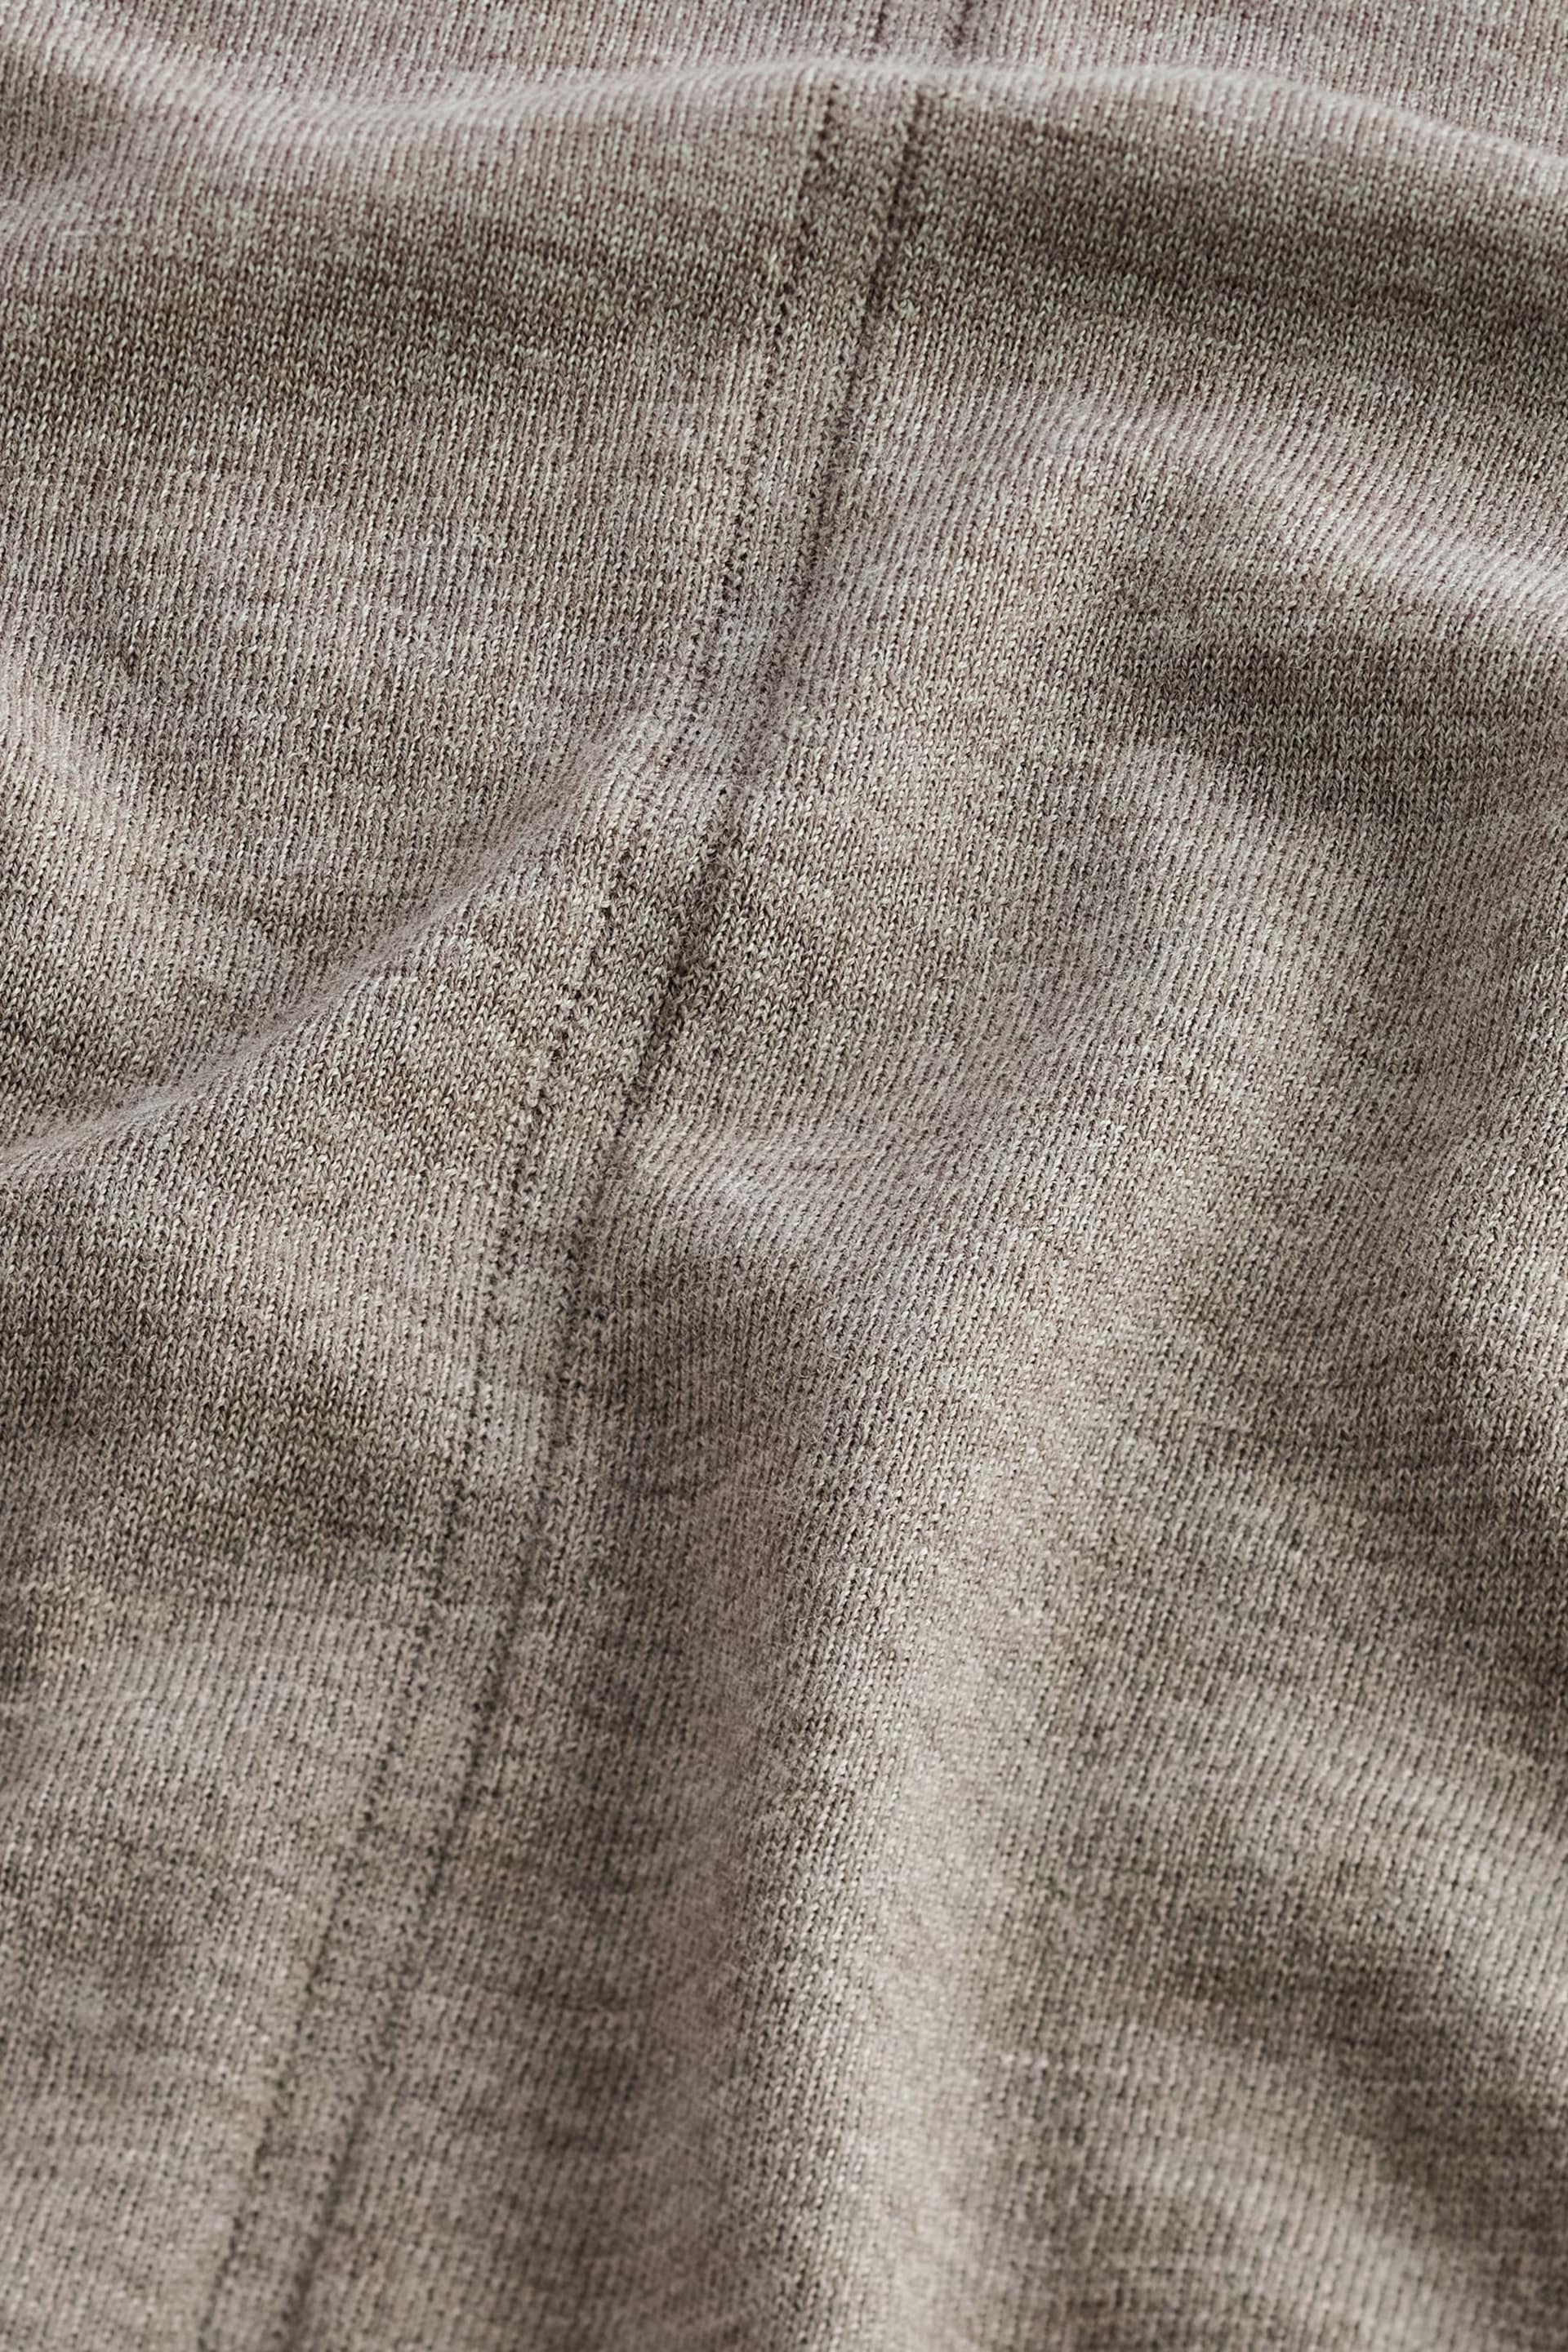 Mole Brown Premium 100% Merino Wool Roll Neck Jumper - Image 6 of 6